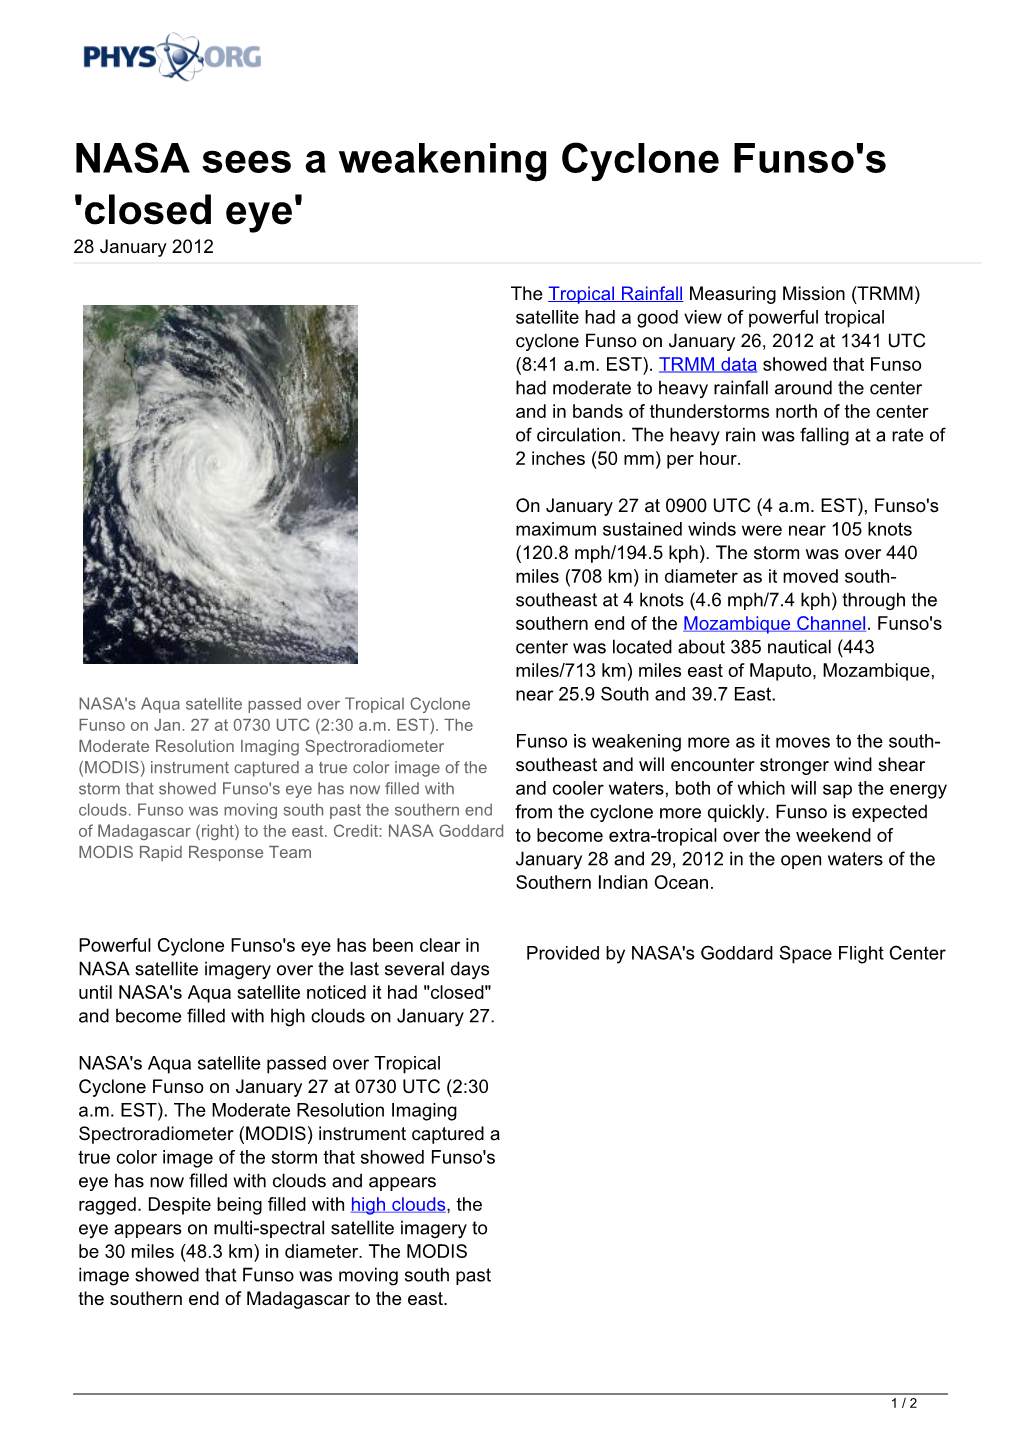 NASA Sees a Weakening Cyclone Funso's 'Closed Eye' 28 January 2012